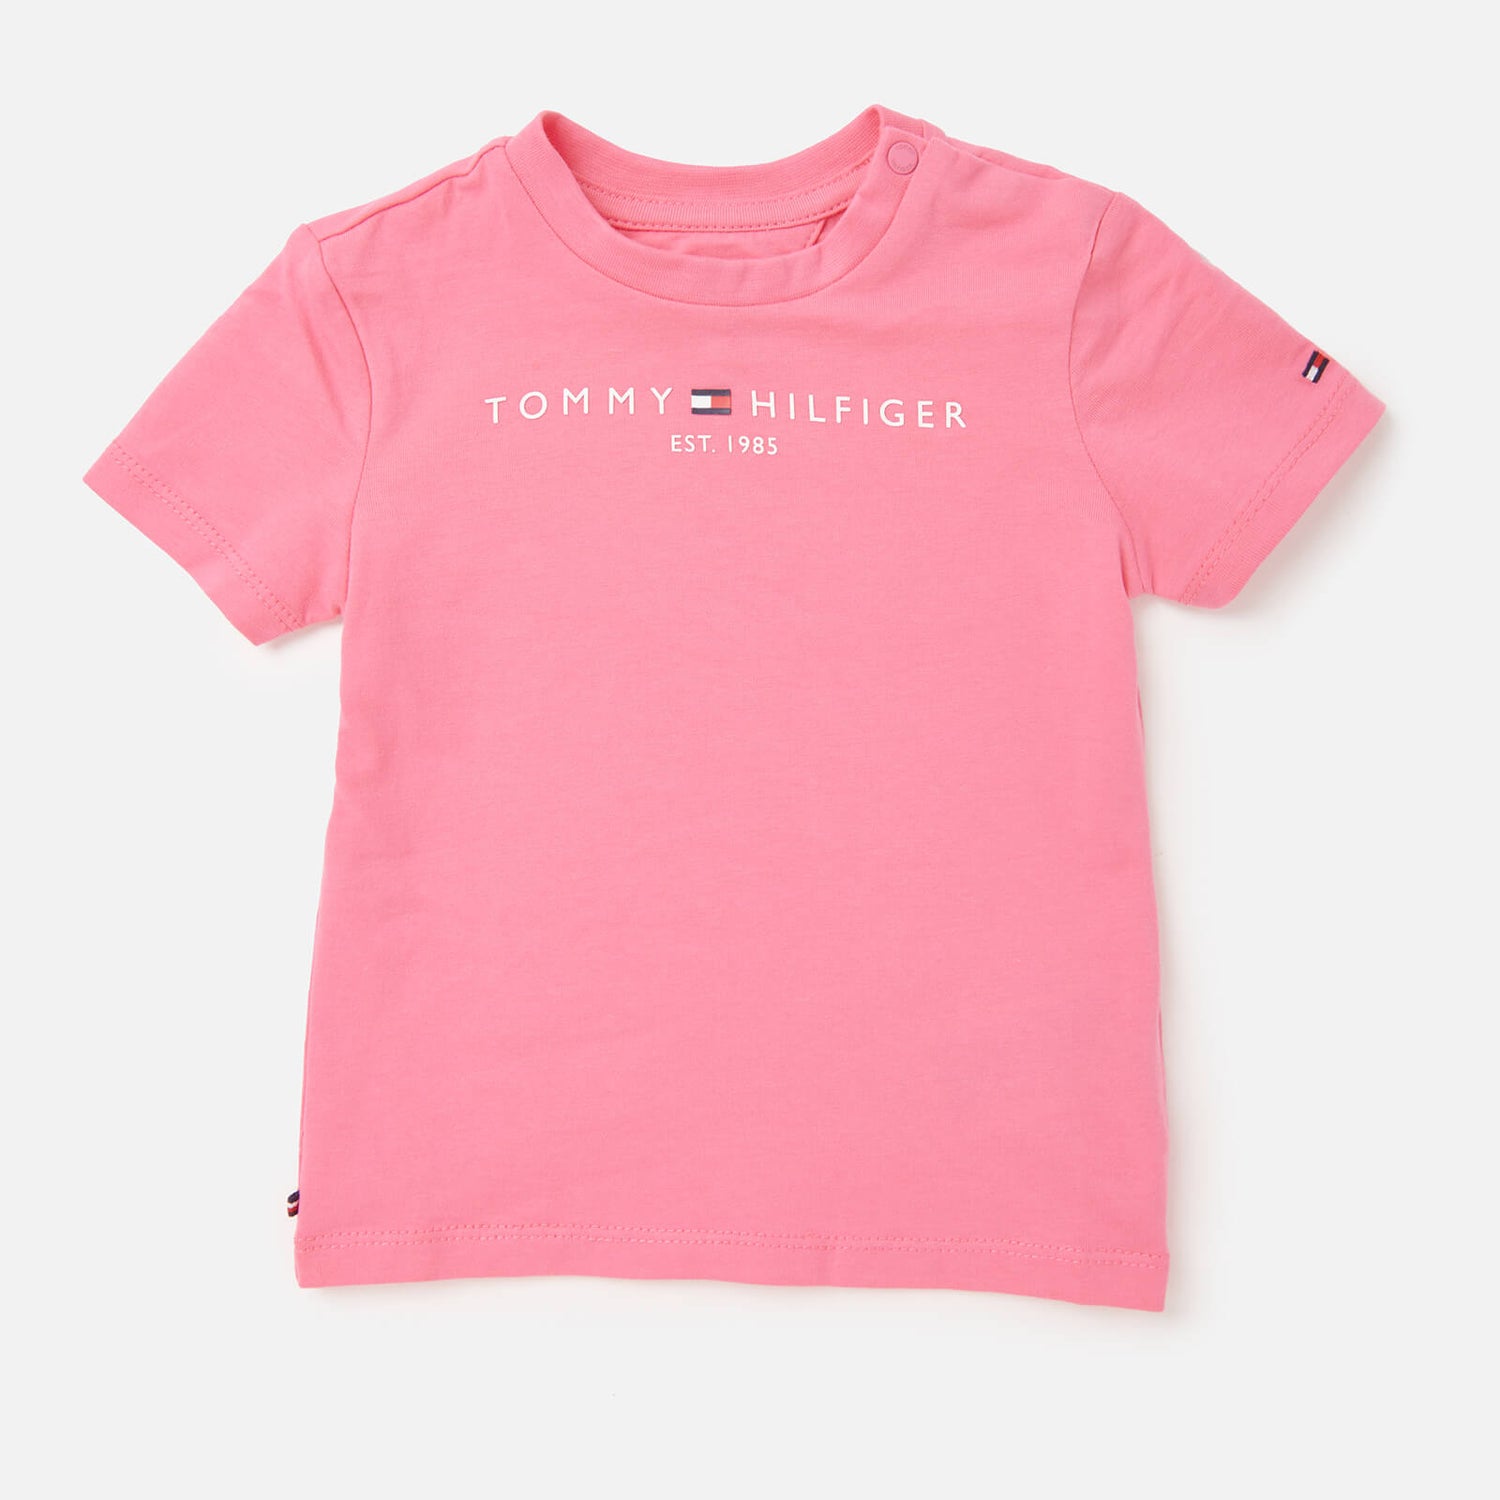 Tommy Hilfiger Baby Essential T-Shirt - Pink